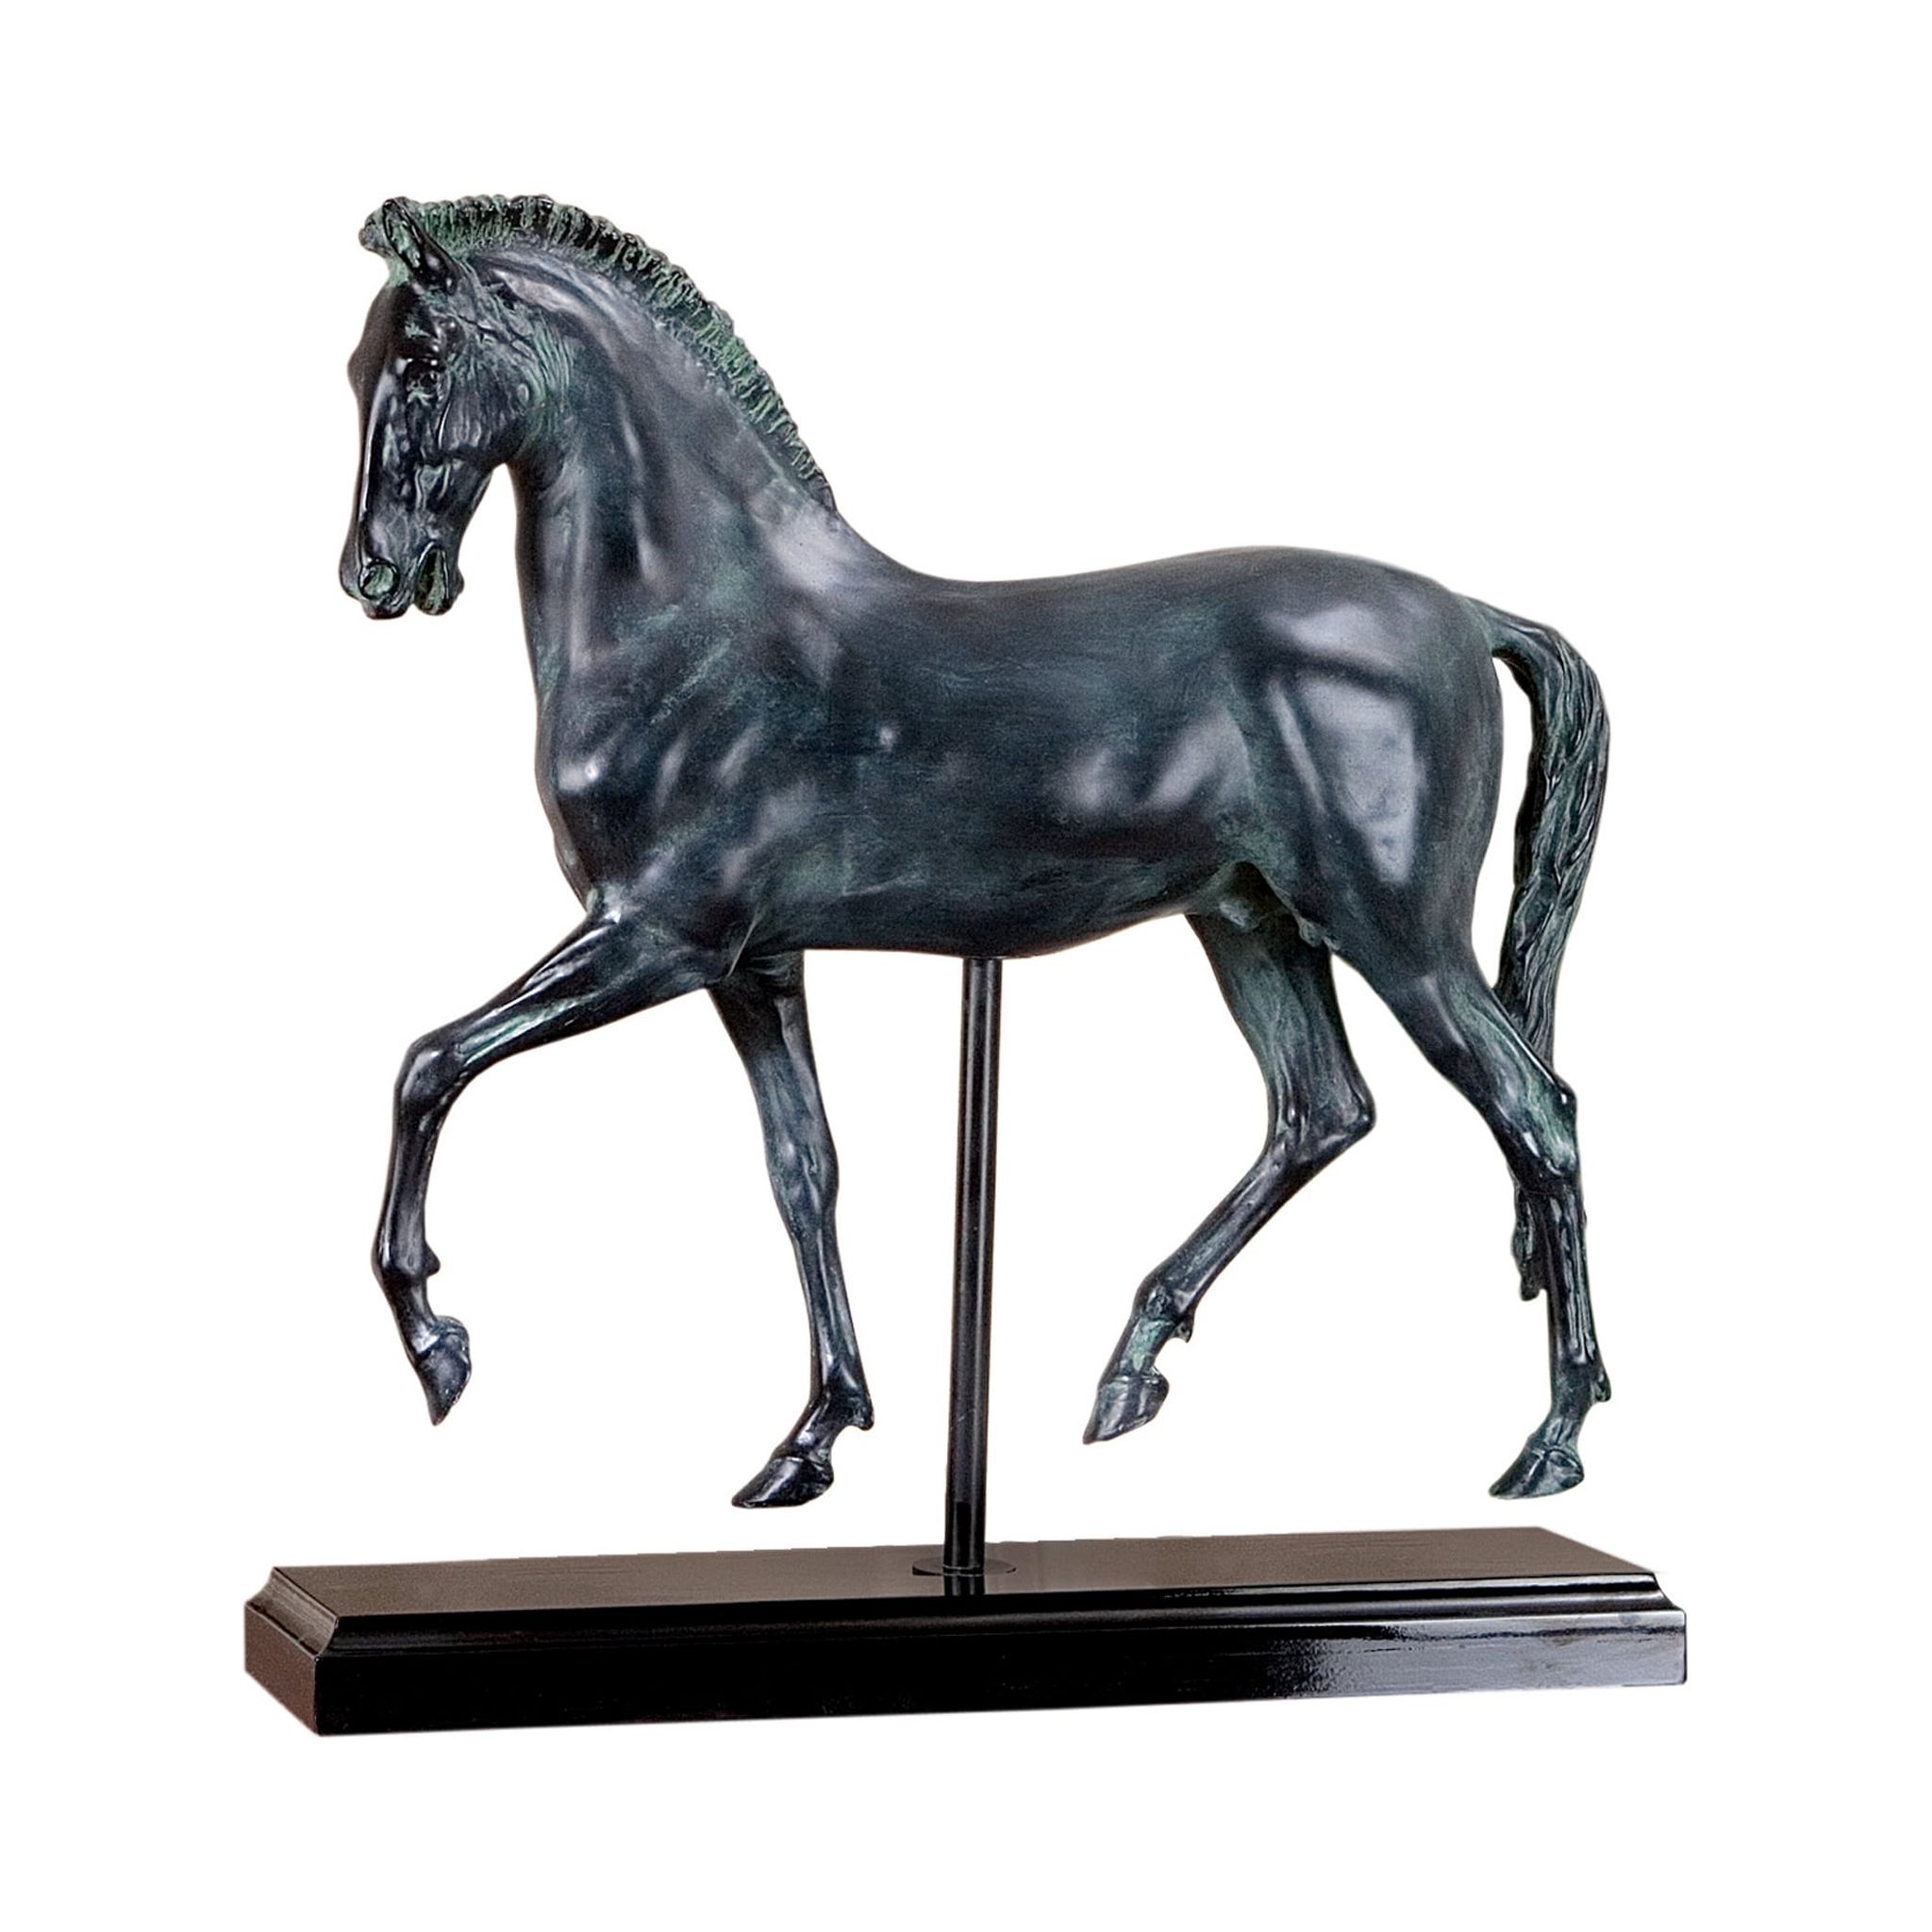 Design Toscano Classical Horse Study Sculpture - image 2 of 2